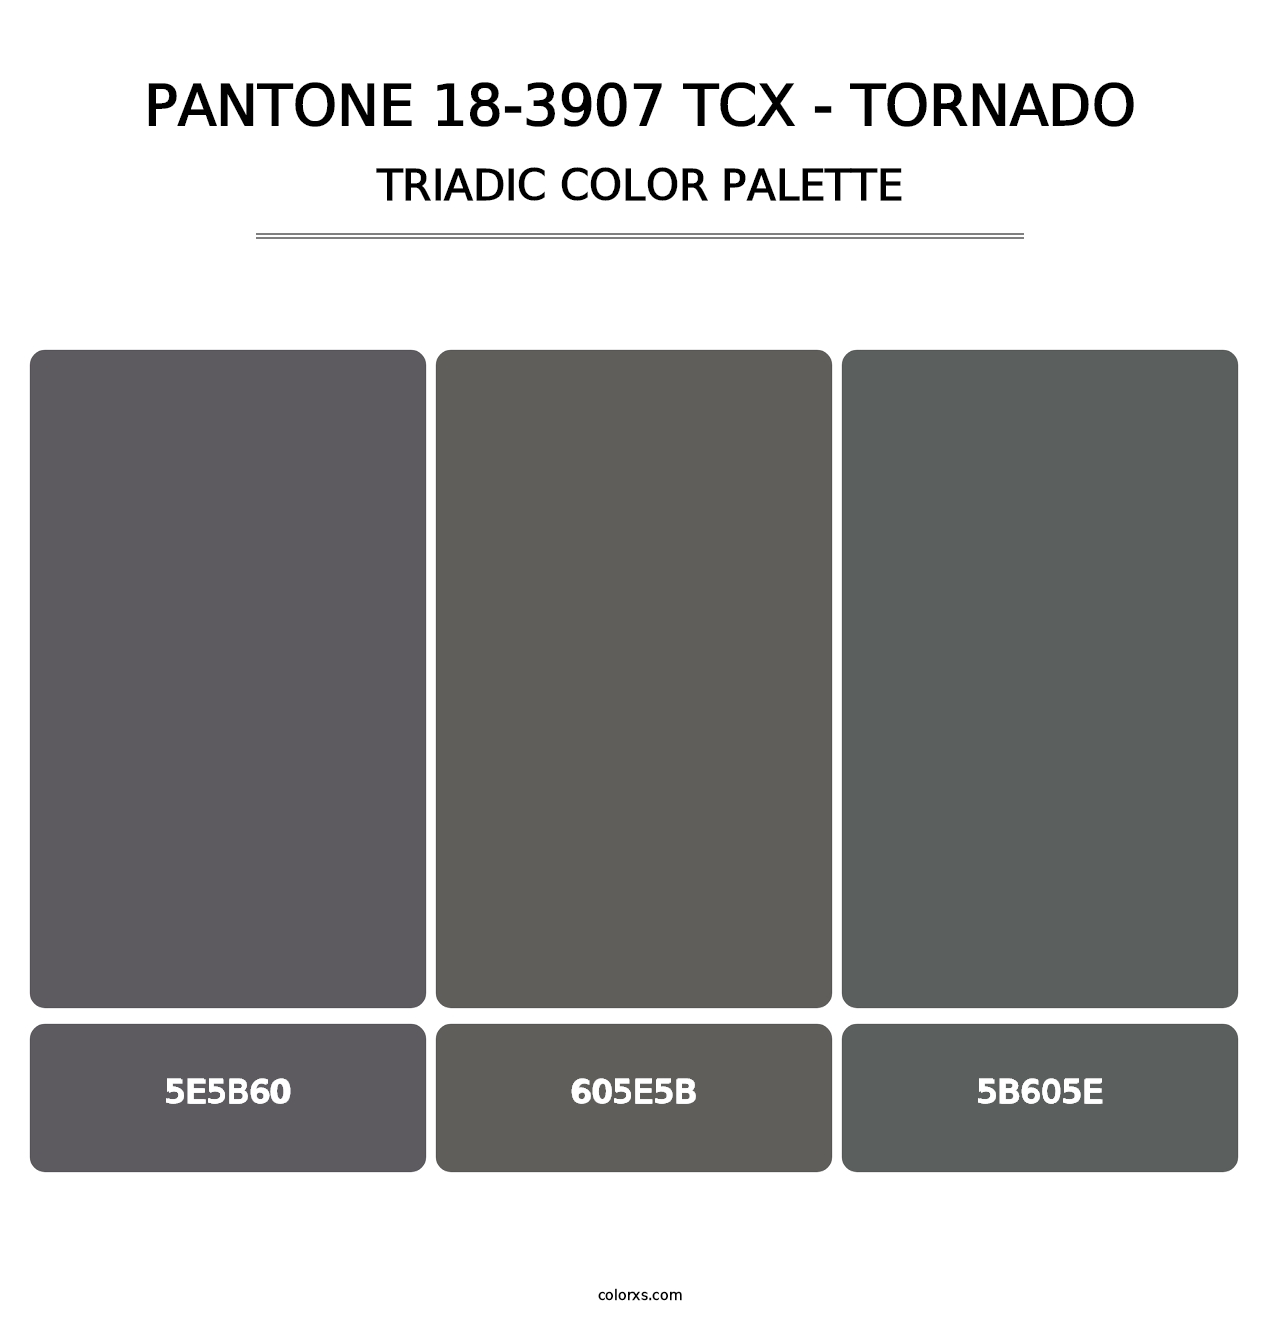 PANTONE 18-3907 TCX - Tornado - Triadic Color Palette